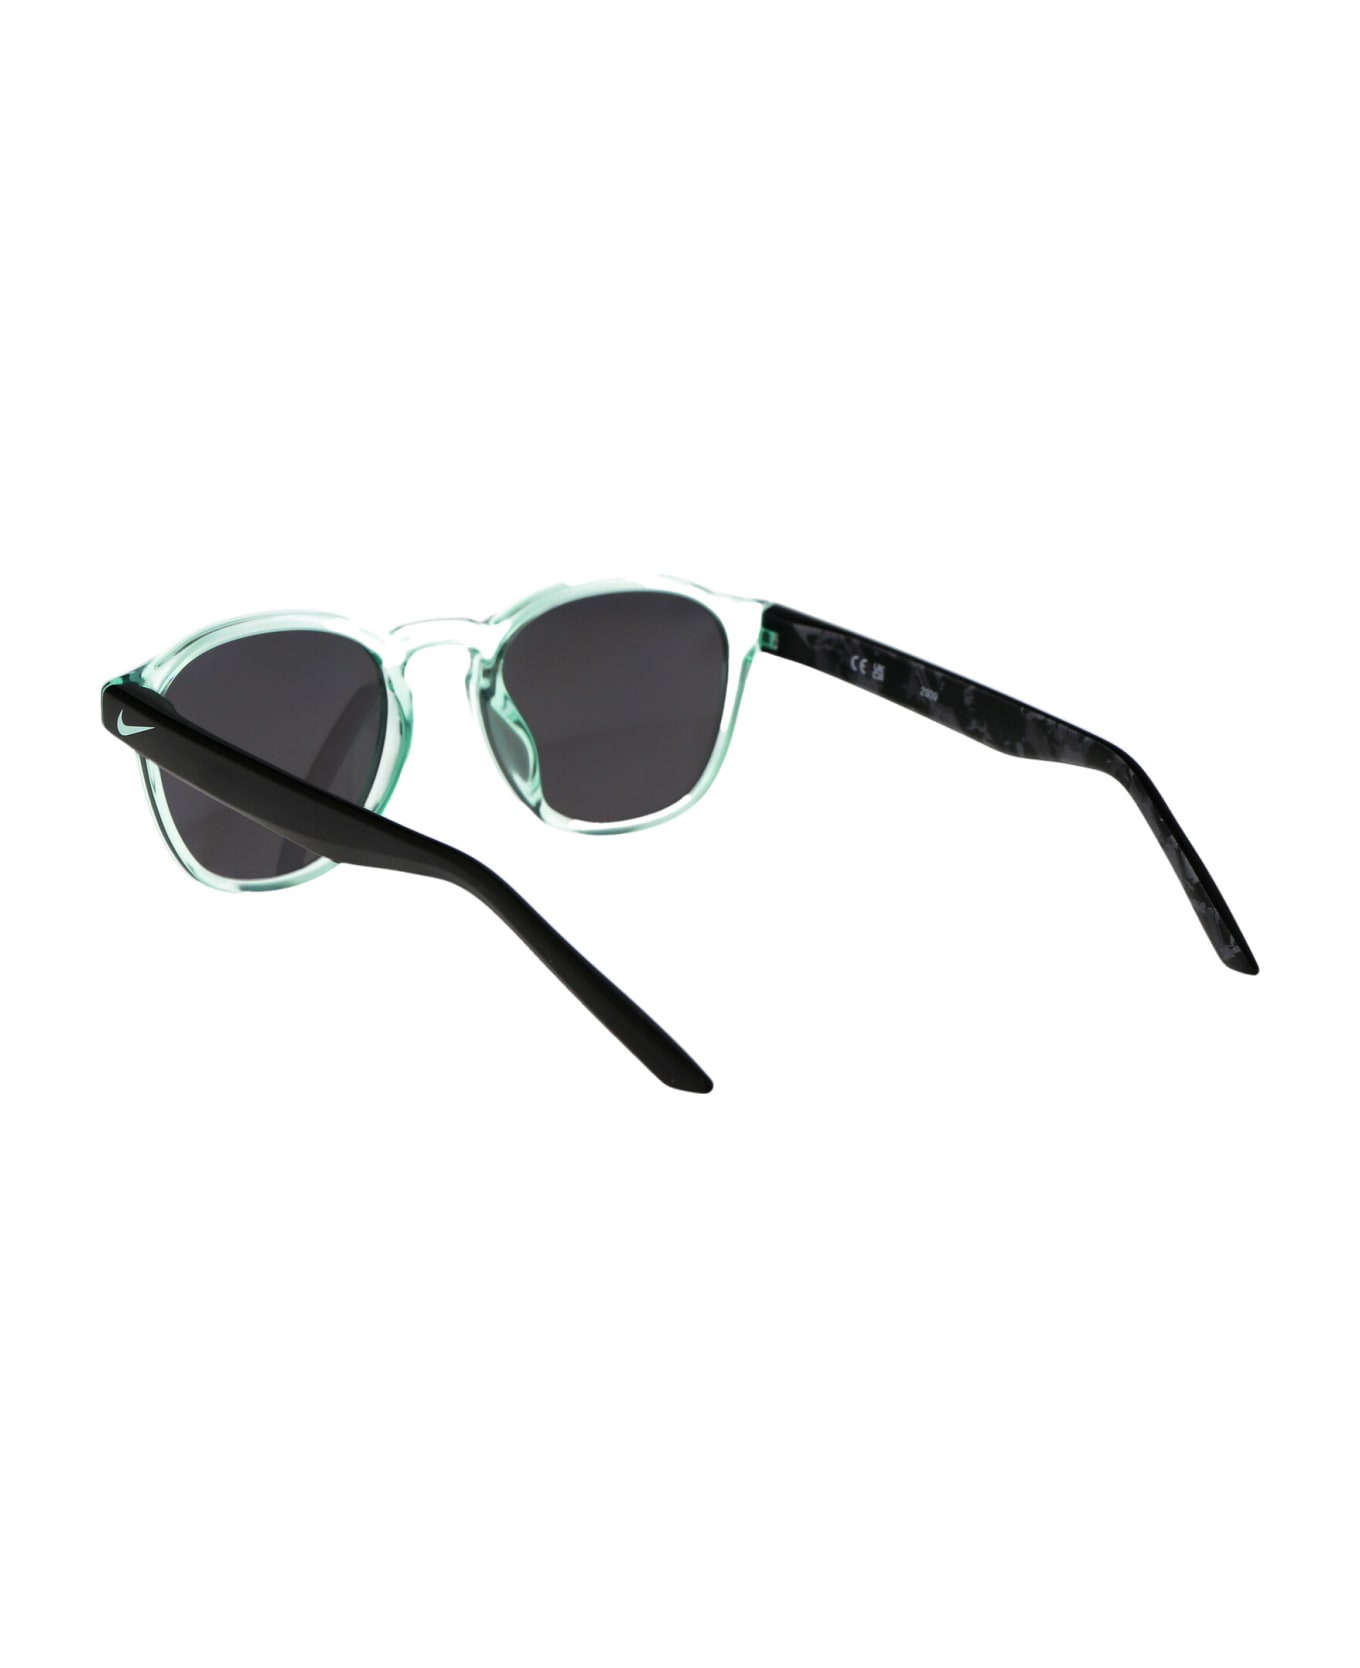 Nike Smash Sunglasses - 342 GREY W/ SILVER FLASH GREEN GLOW